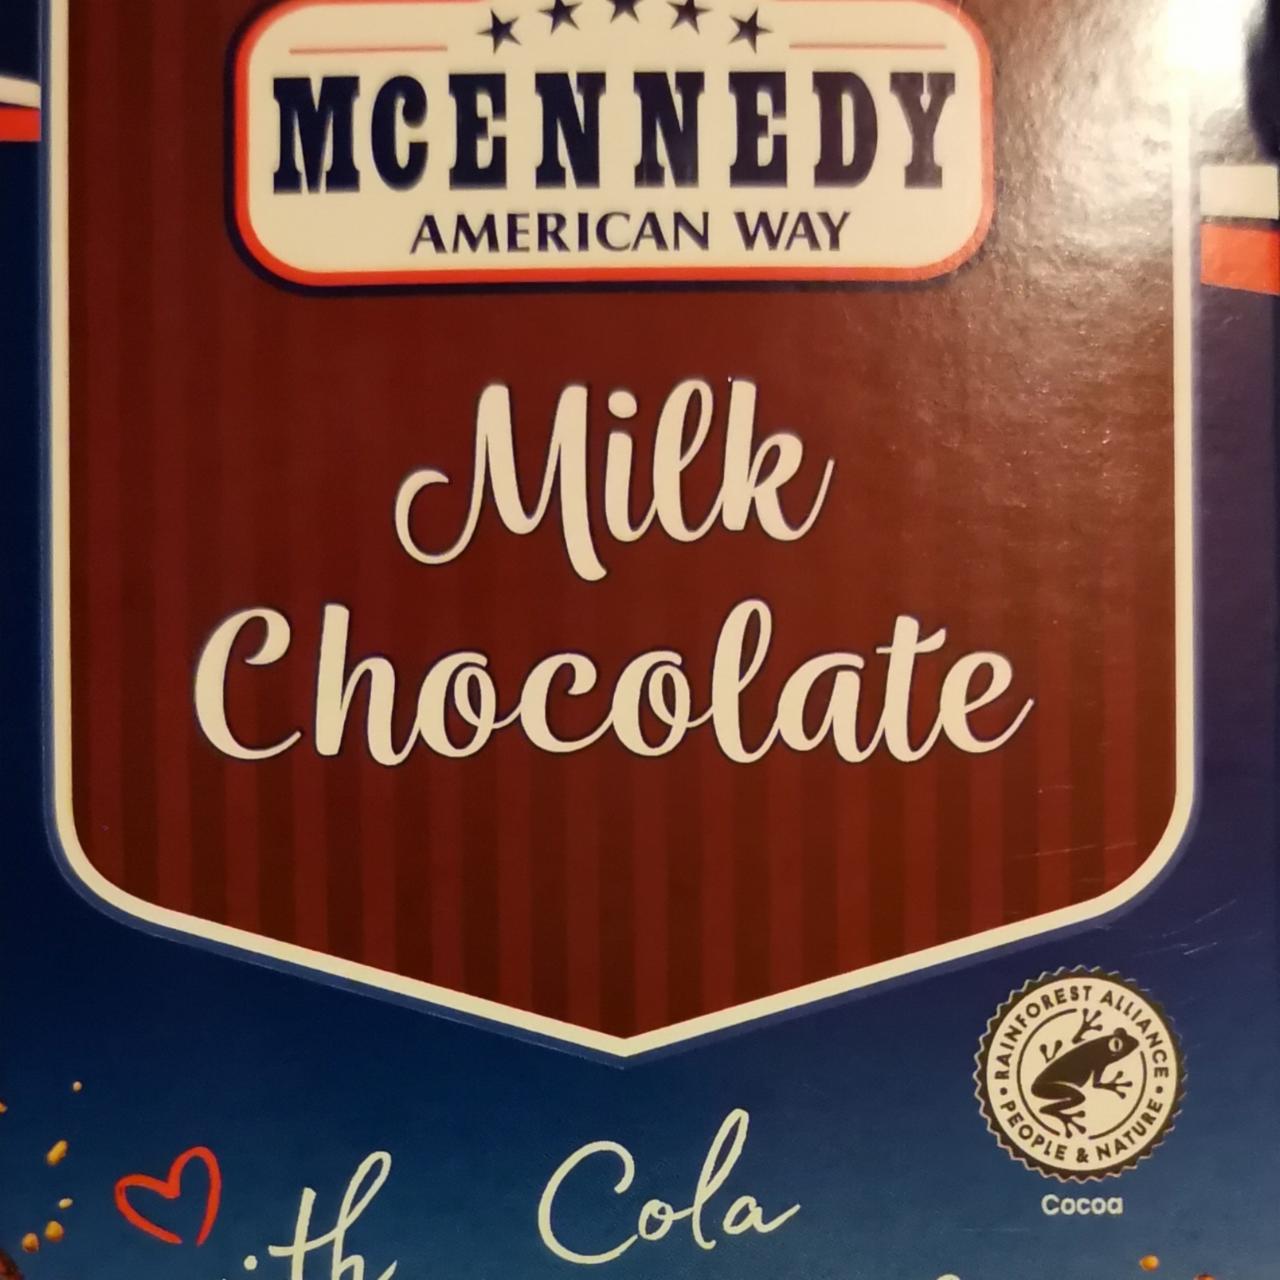 Fotografie - McEnnedy American Way Milk chocolate meets cola pearls